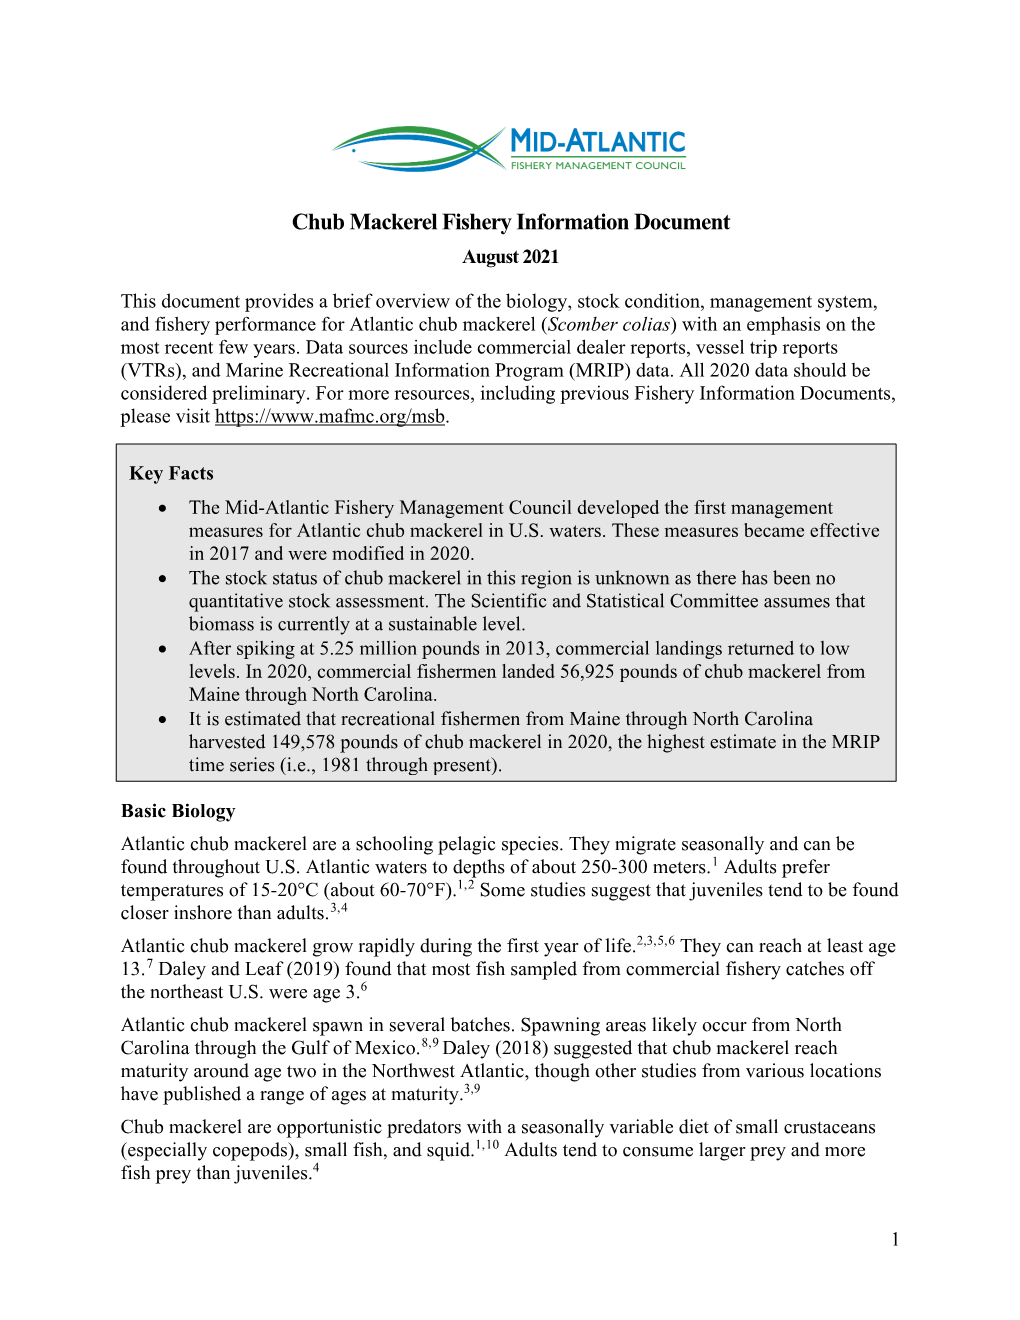 Chub Mackerel Fishery Information Document August 2021